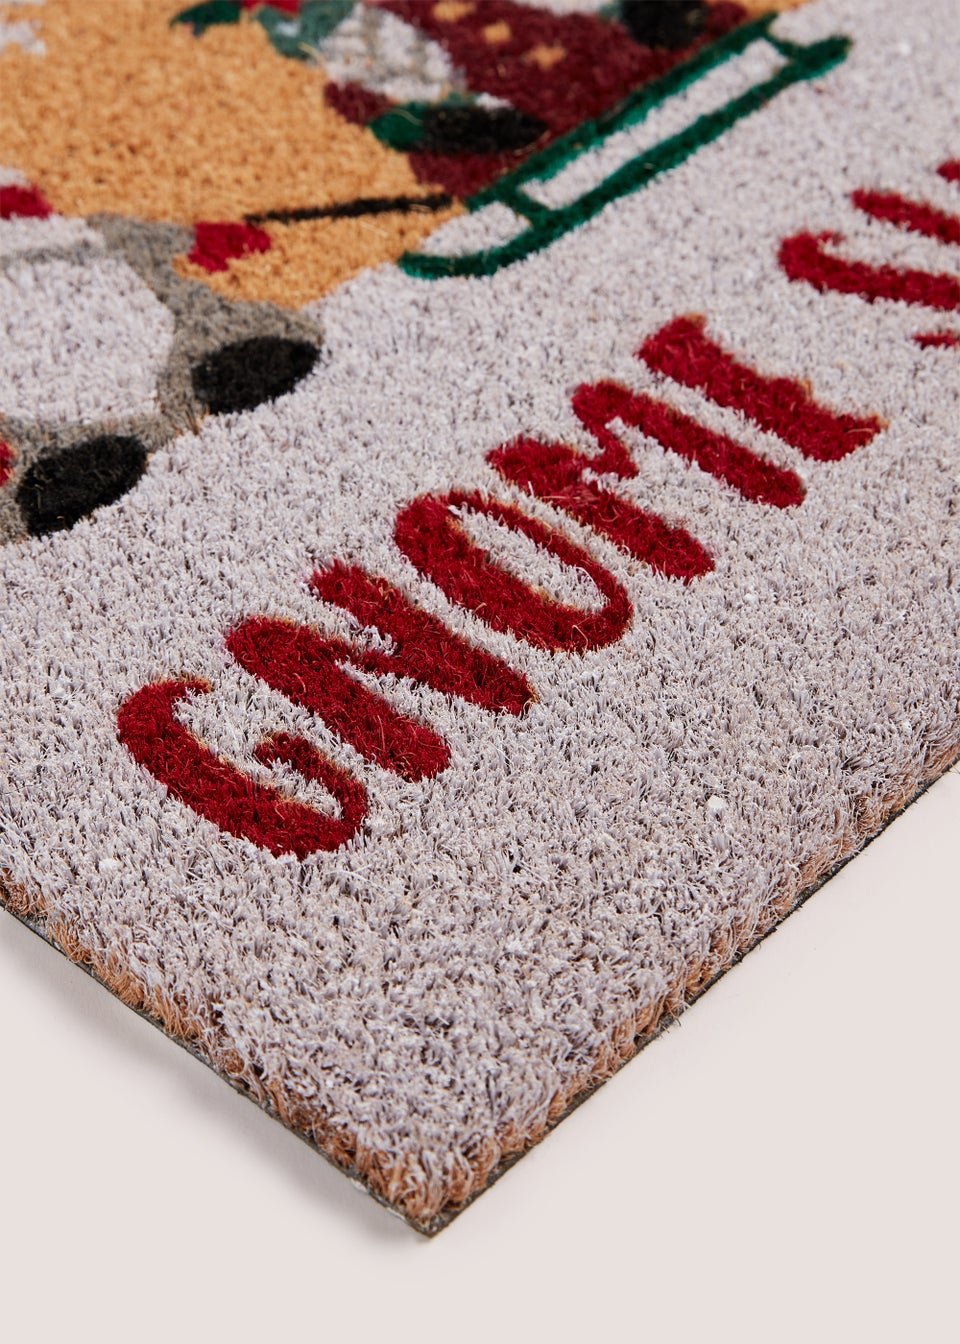 Christmas Gnome Doormat (60cm x 40cm)